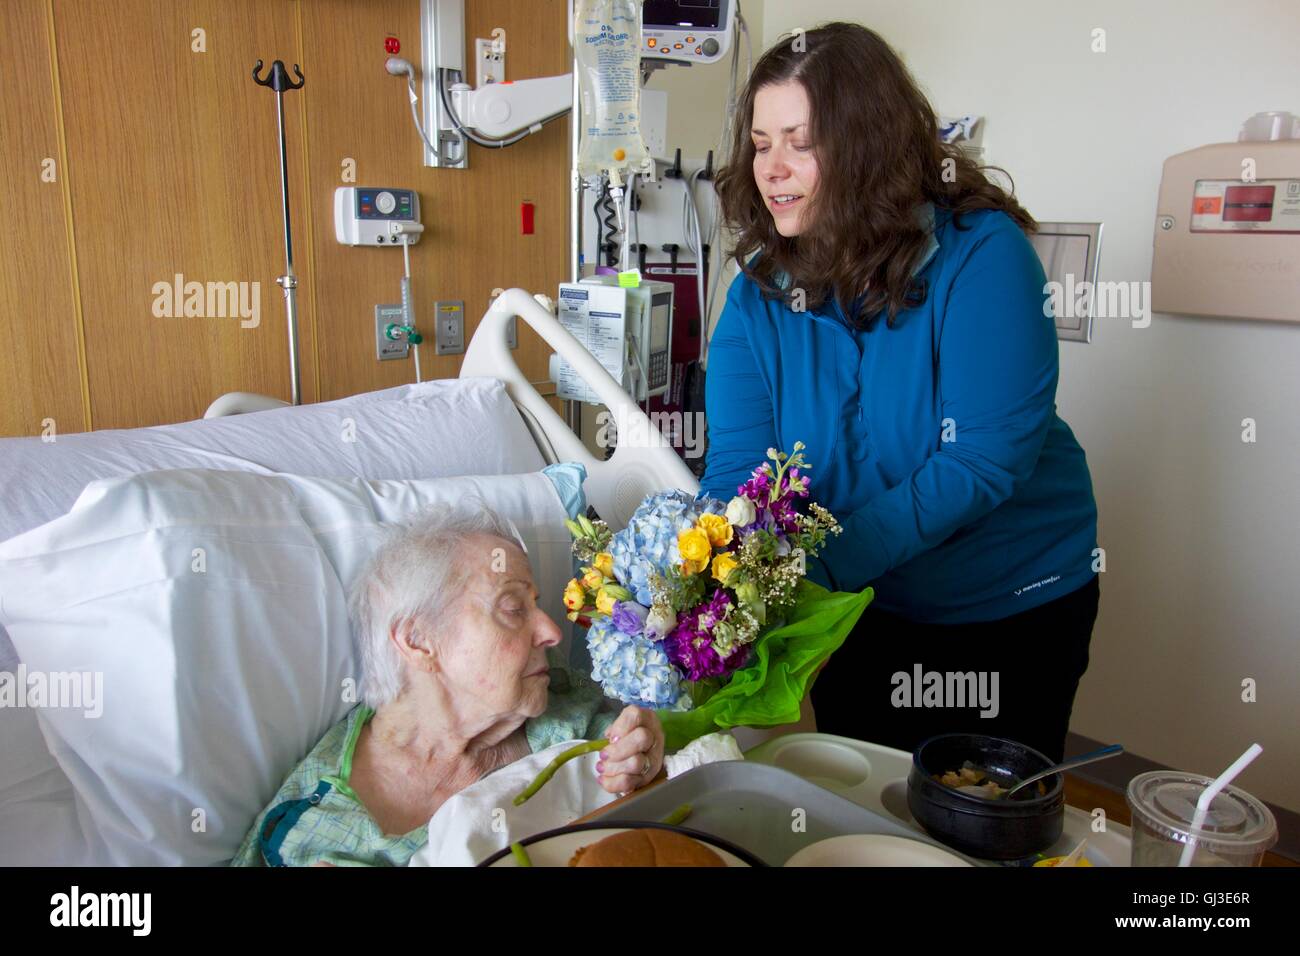 https://c8.alamy.com/comp/GJ3E6R/a-woman-visiting-her-sick-grandmother-in-the-hospital-holds-a-bouquet-GJ3E6R.jpg